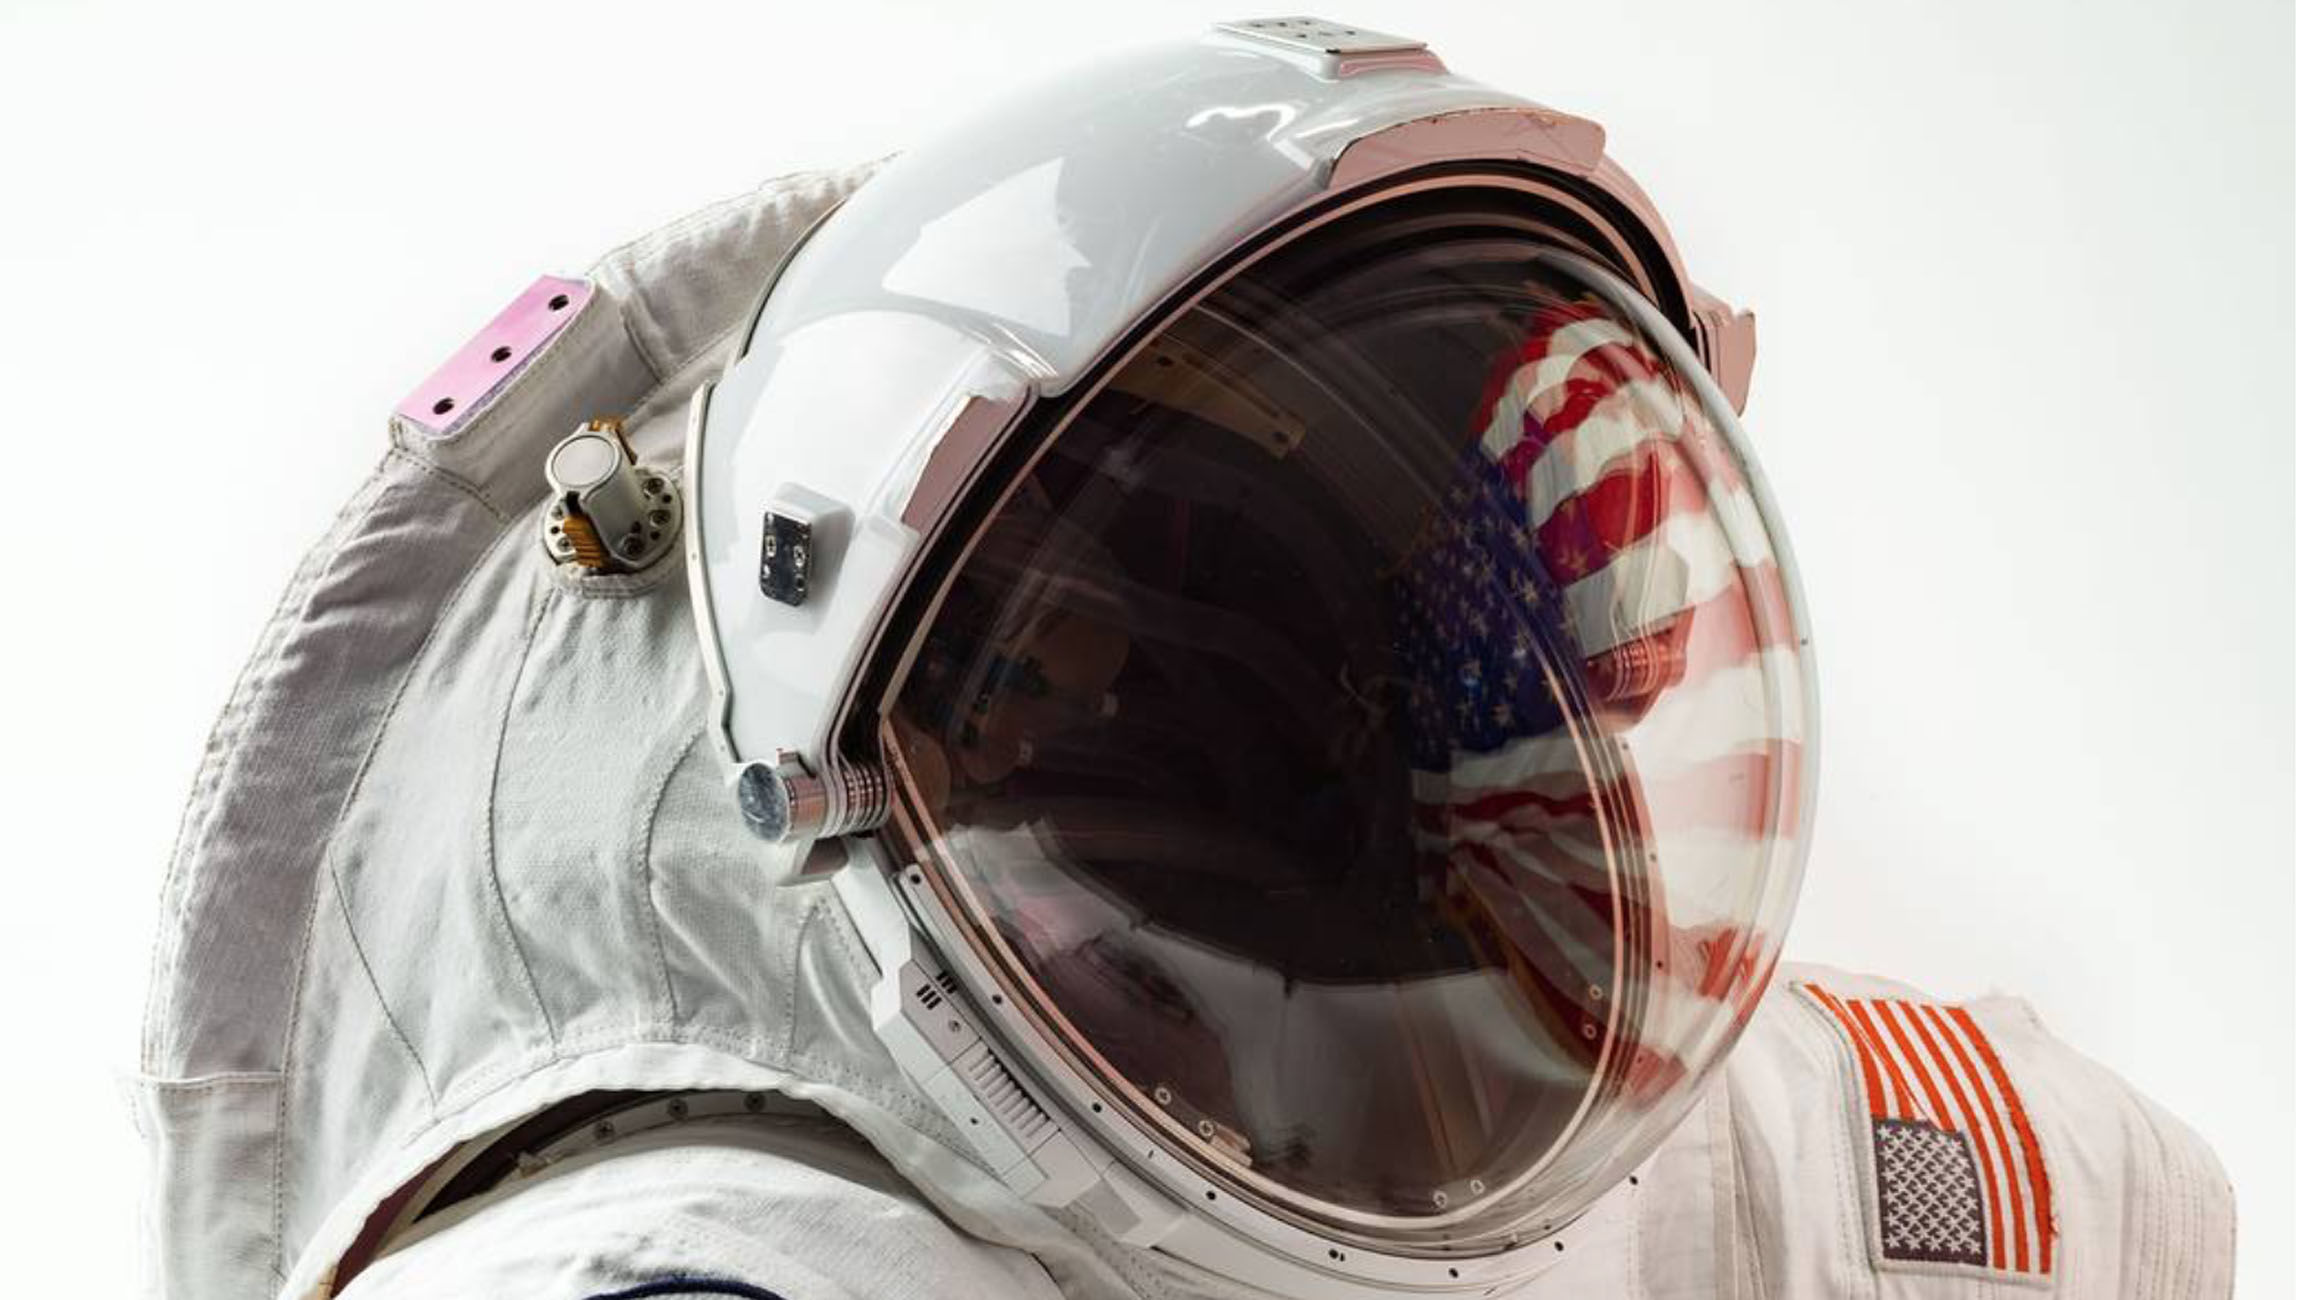 NASA xEMU spacesuit